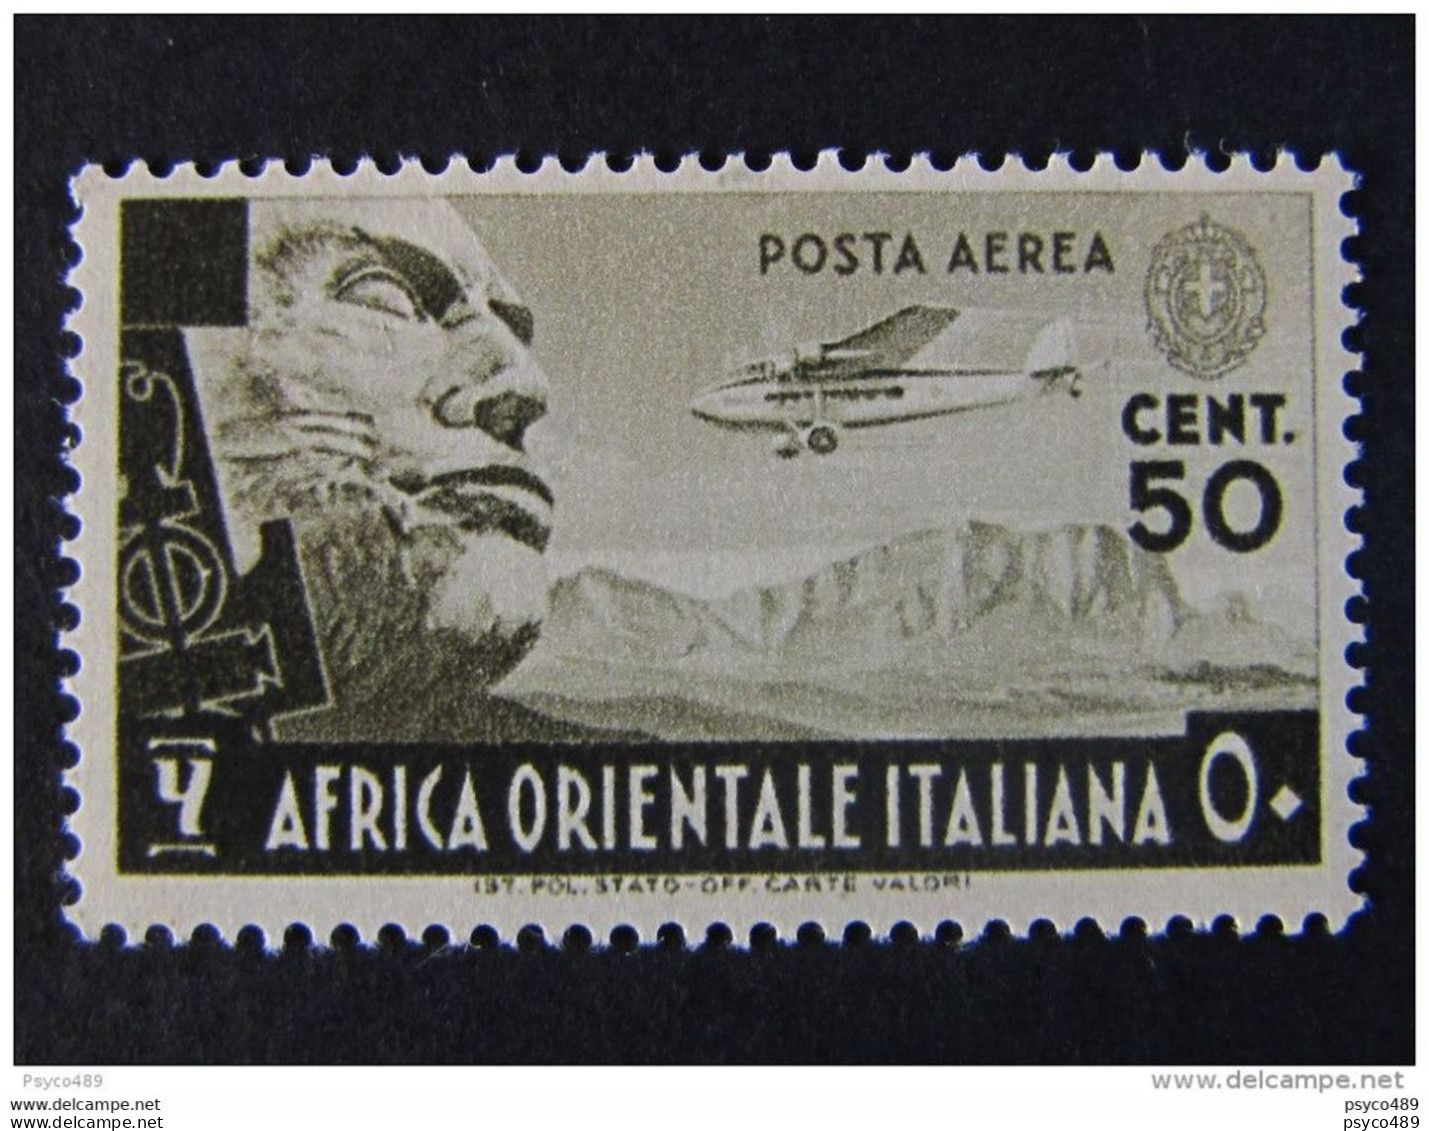 ITALIA Africa Orientale Italiana Aerea -1938- "Soggetti Vari" C. 50 MH* (descrizione) - Italiaans Oost-Afrika